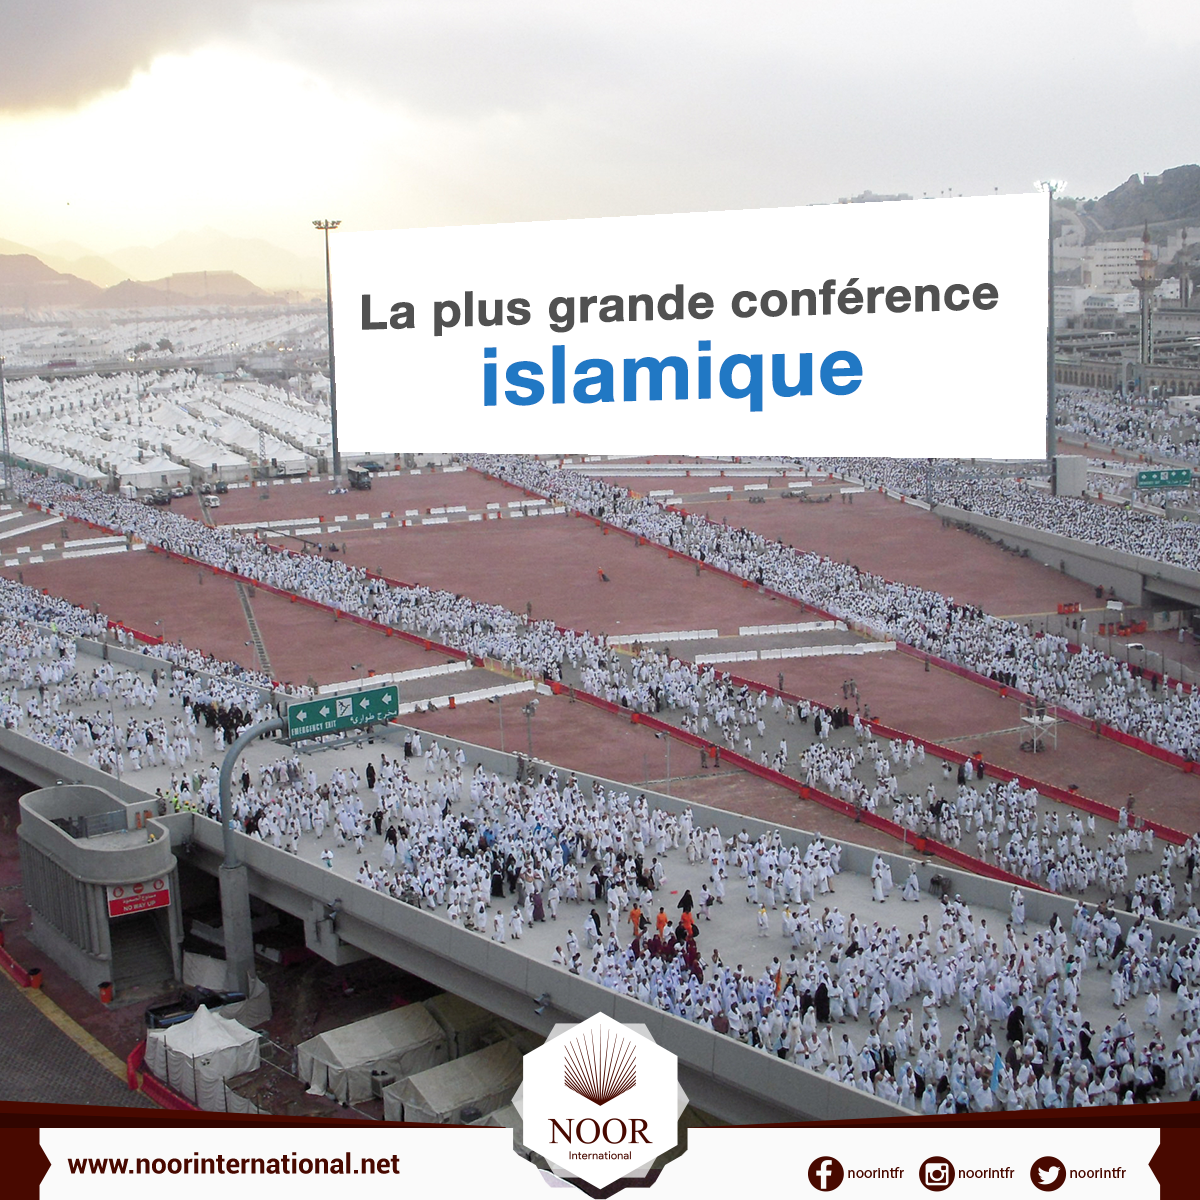 La plus grande conférence islamique